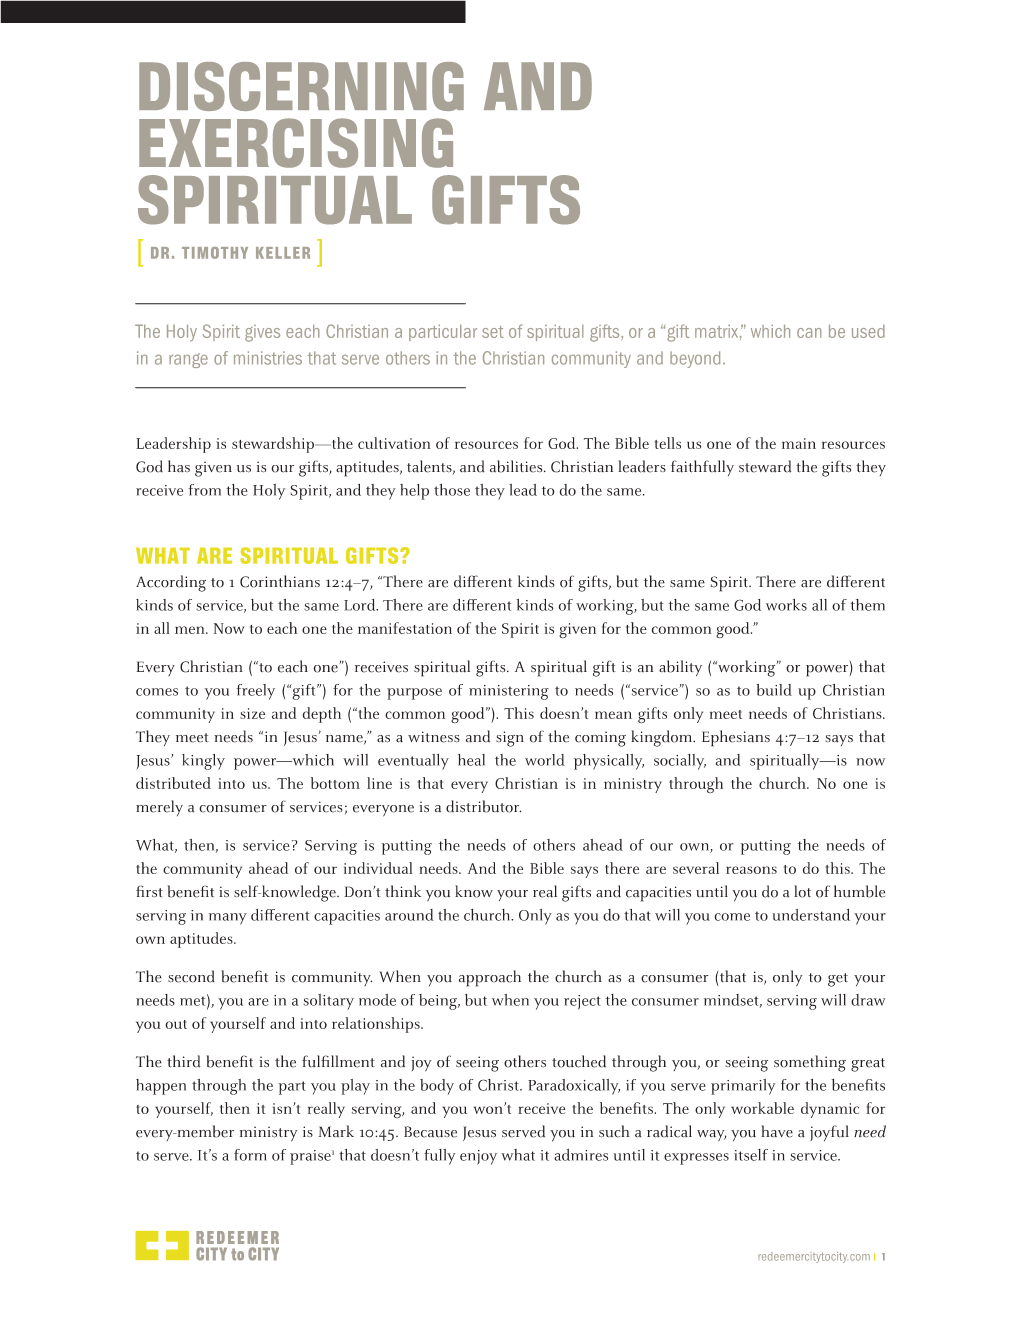 Discerning and Exercising Spiritual Gifts by Tim Keller